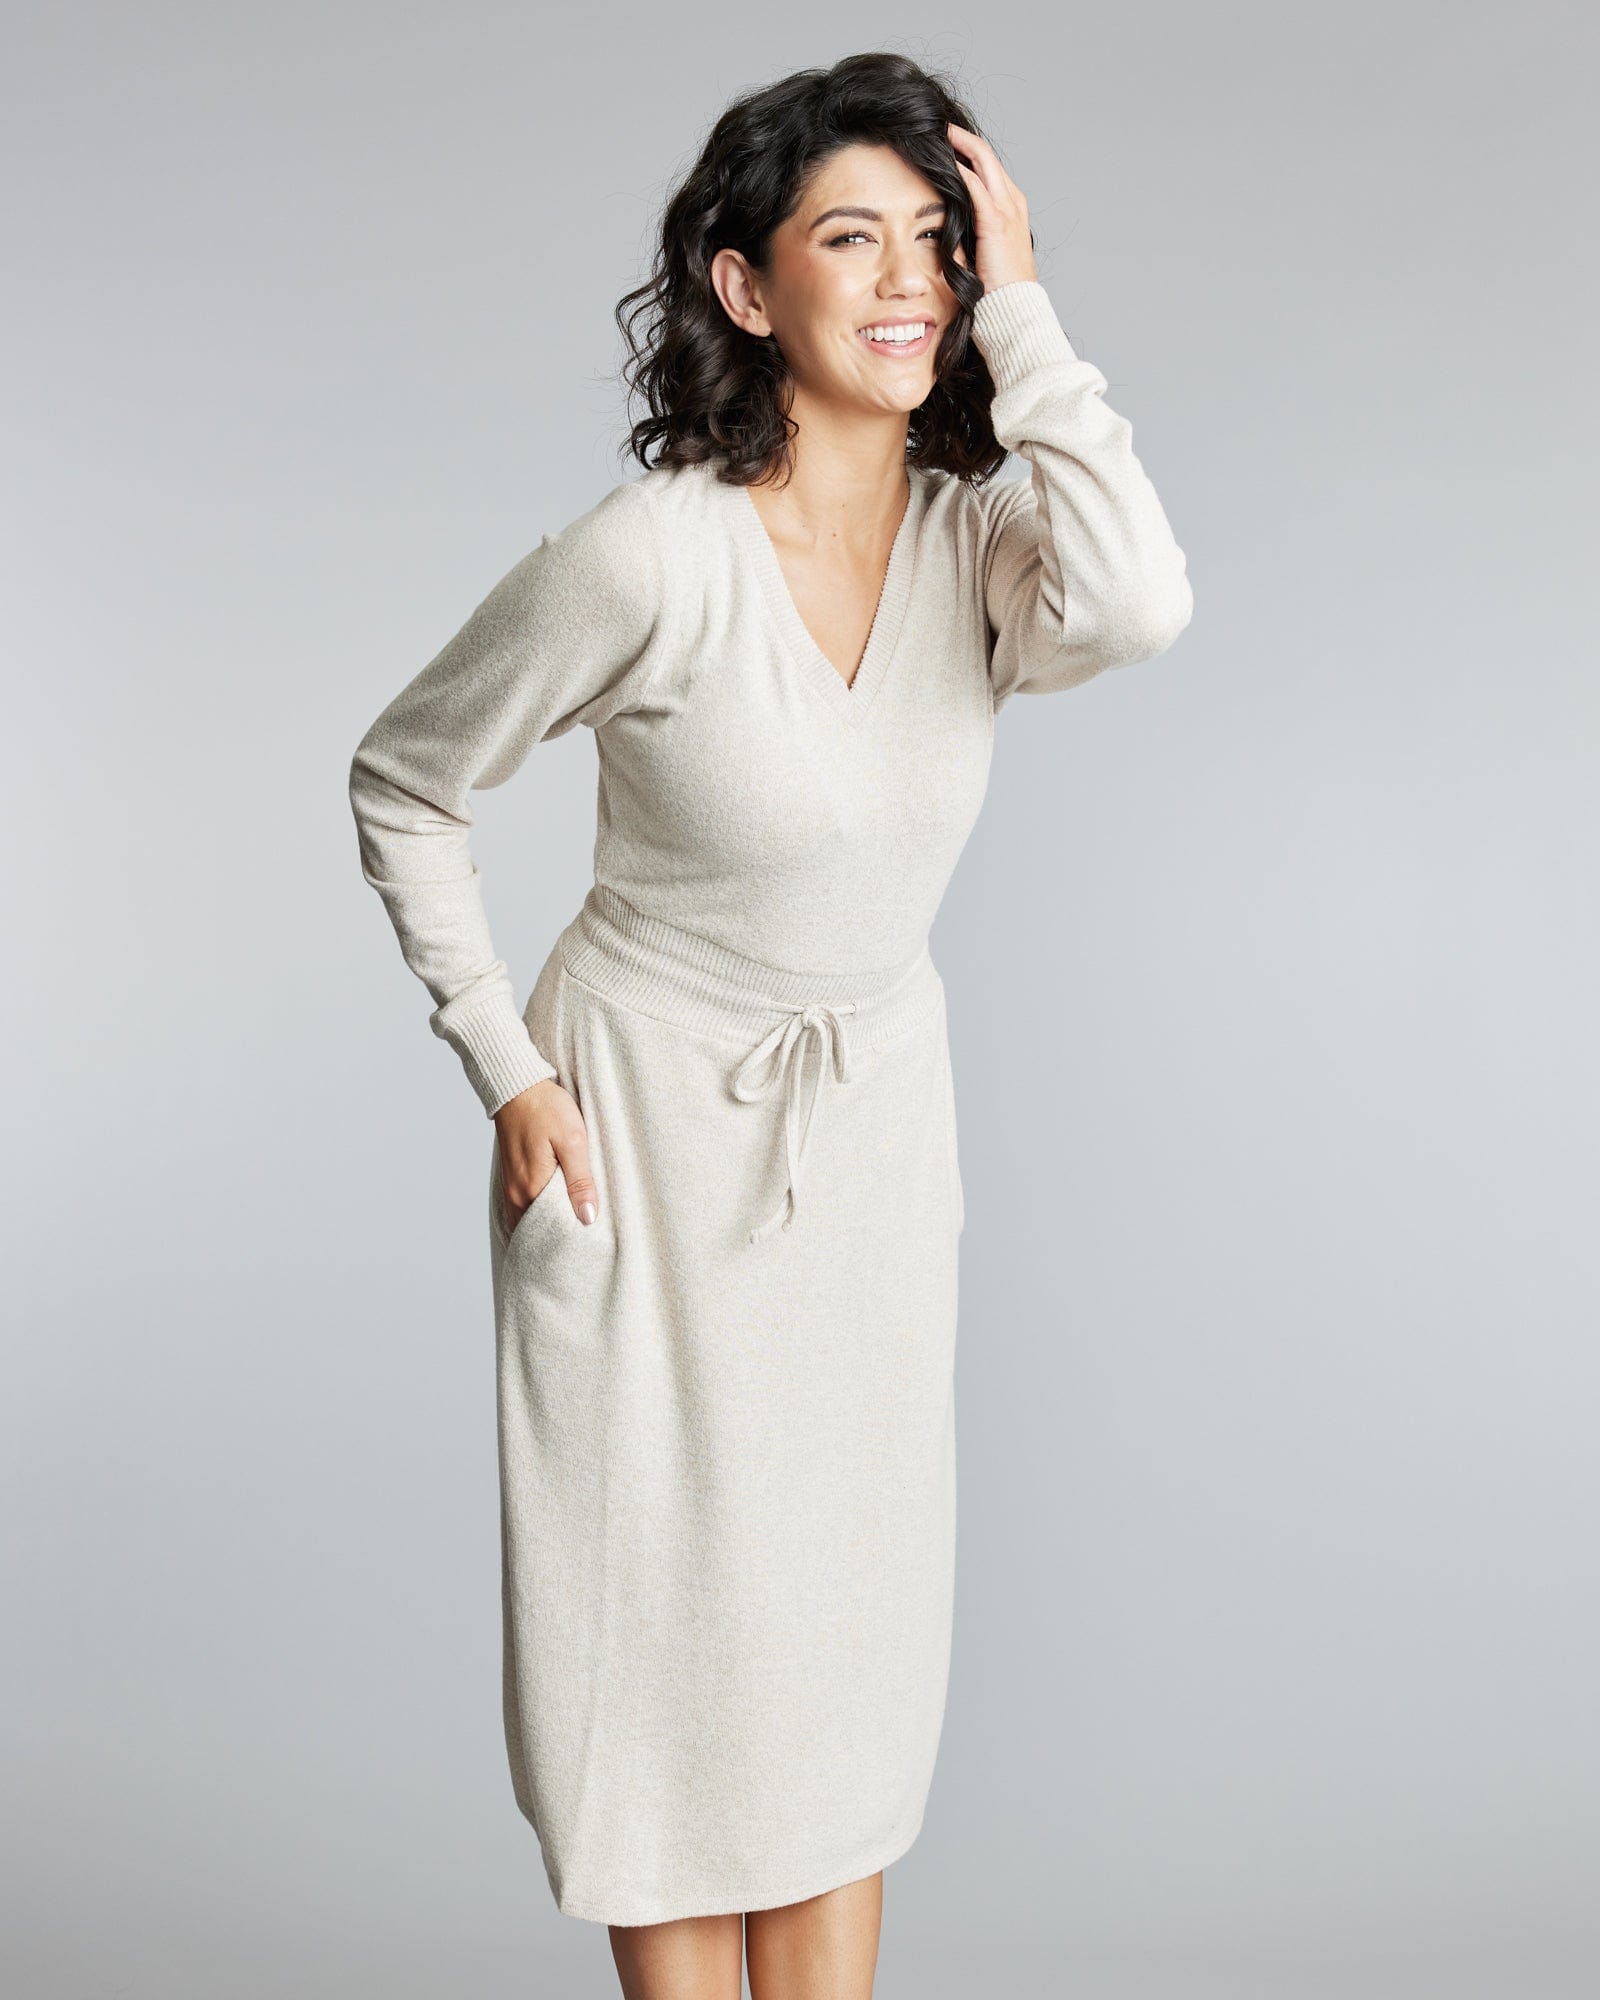 Woman in a long sleeve, knee-length sweater dress